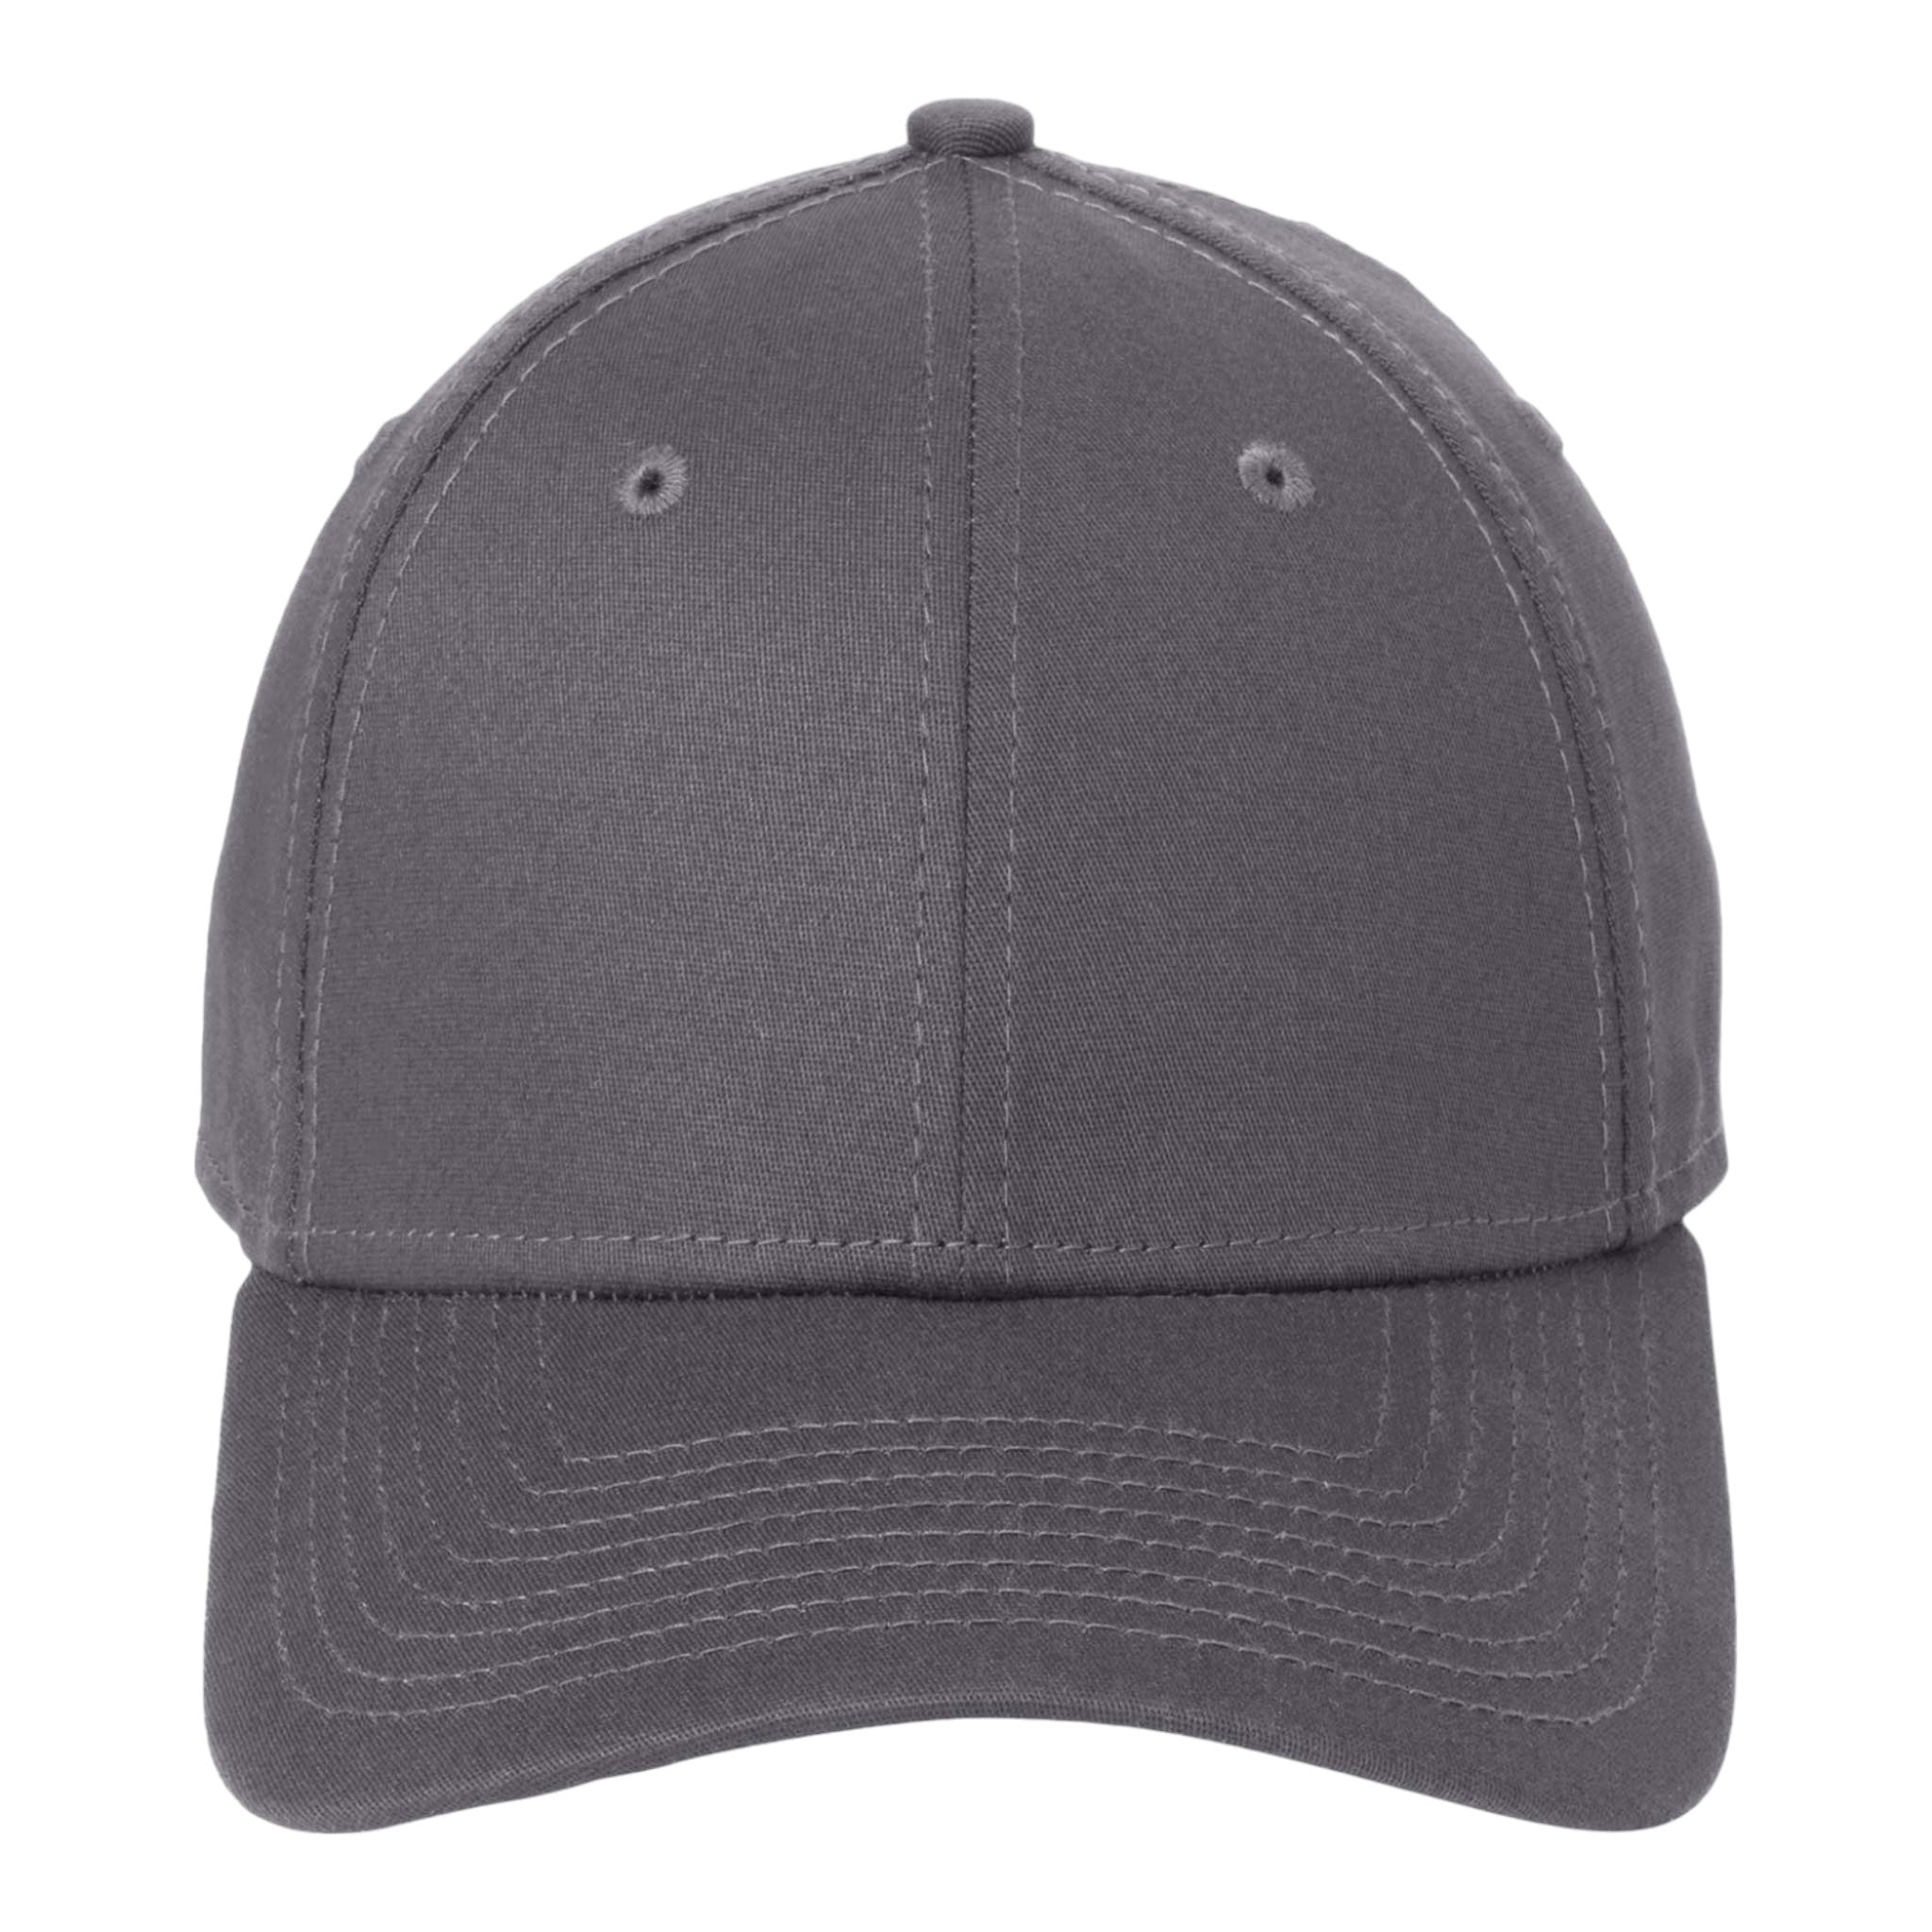 Front view of New Era NE1000 custom hat in graphite